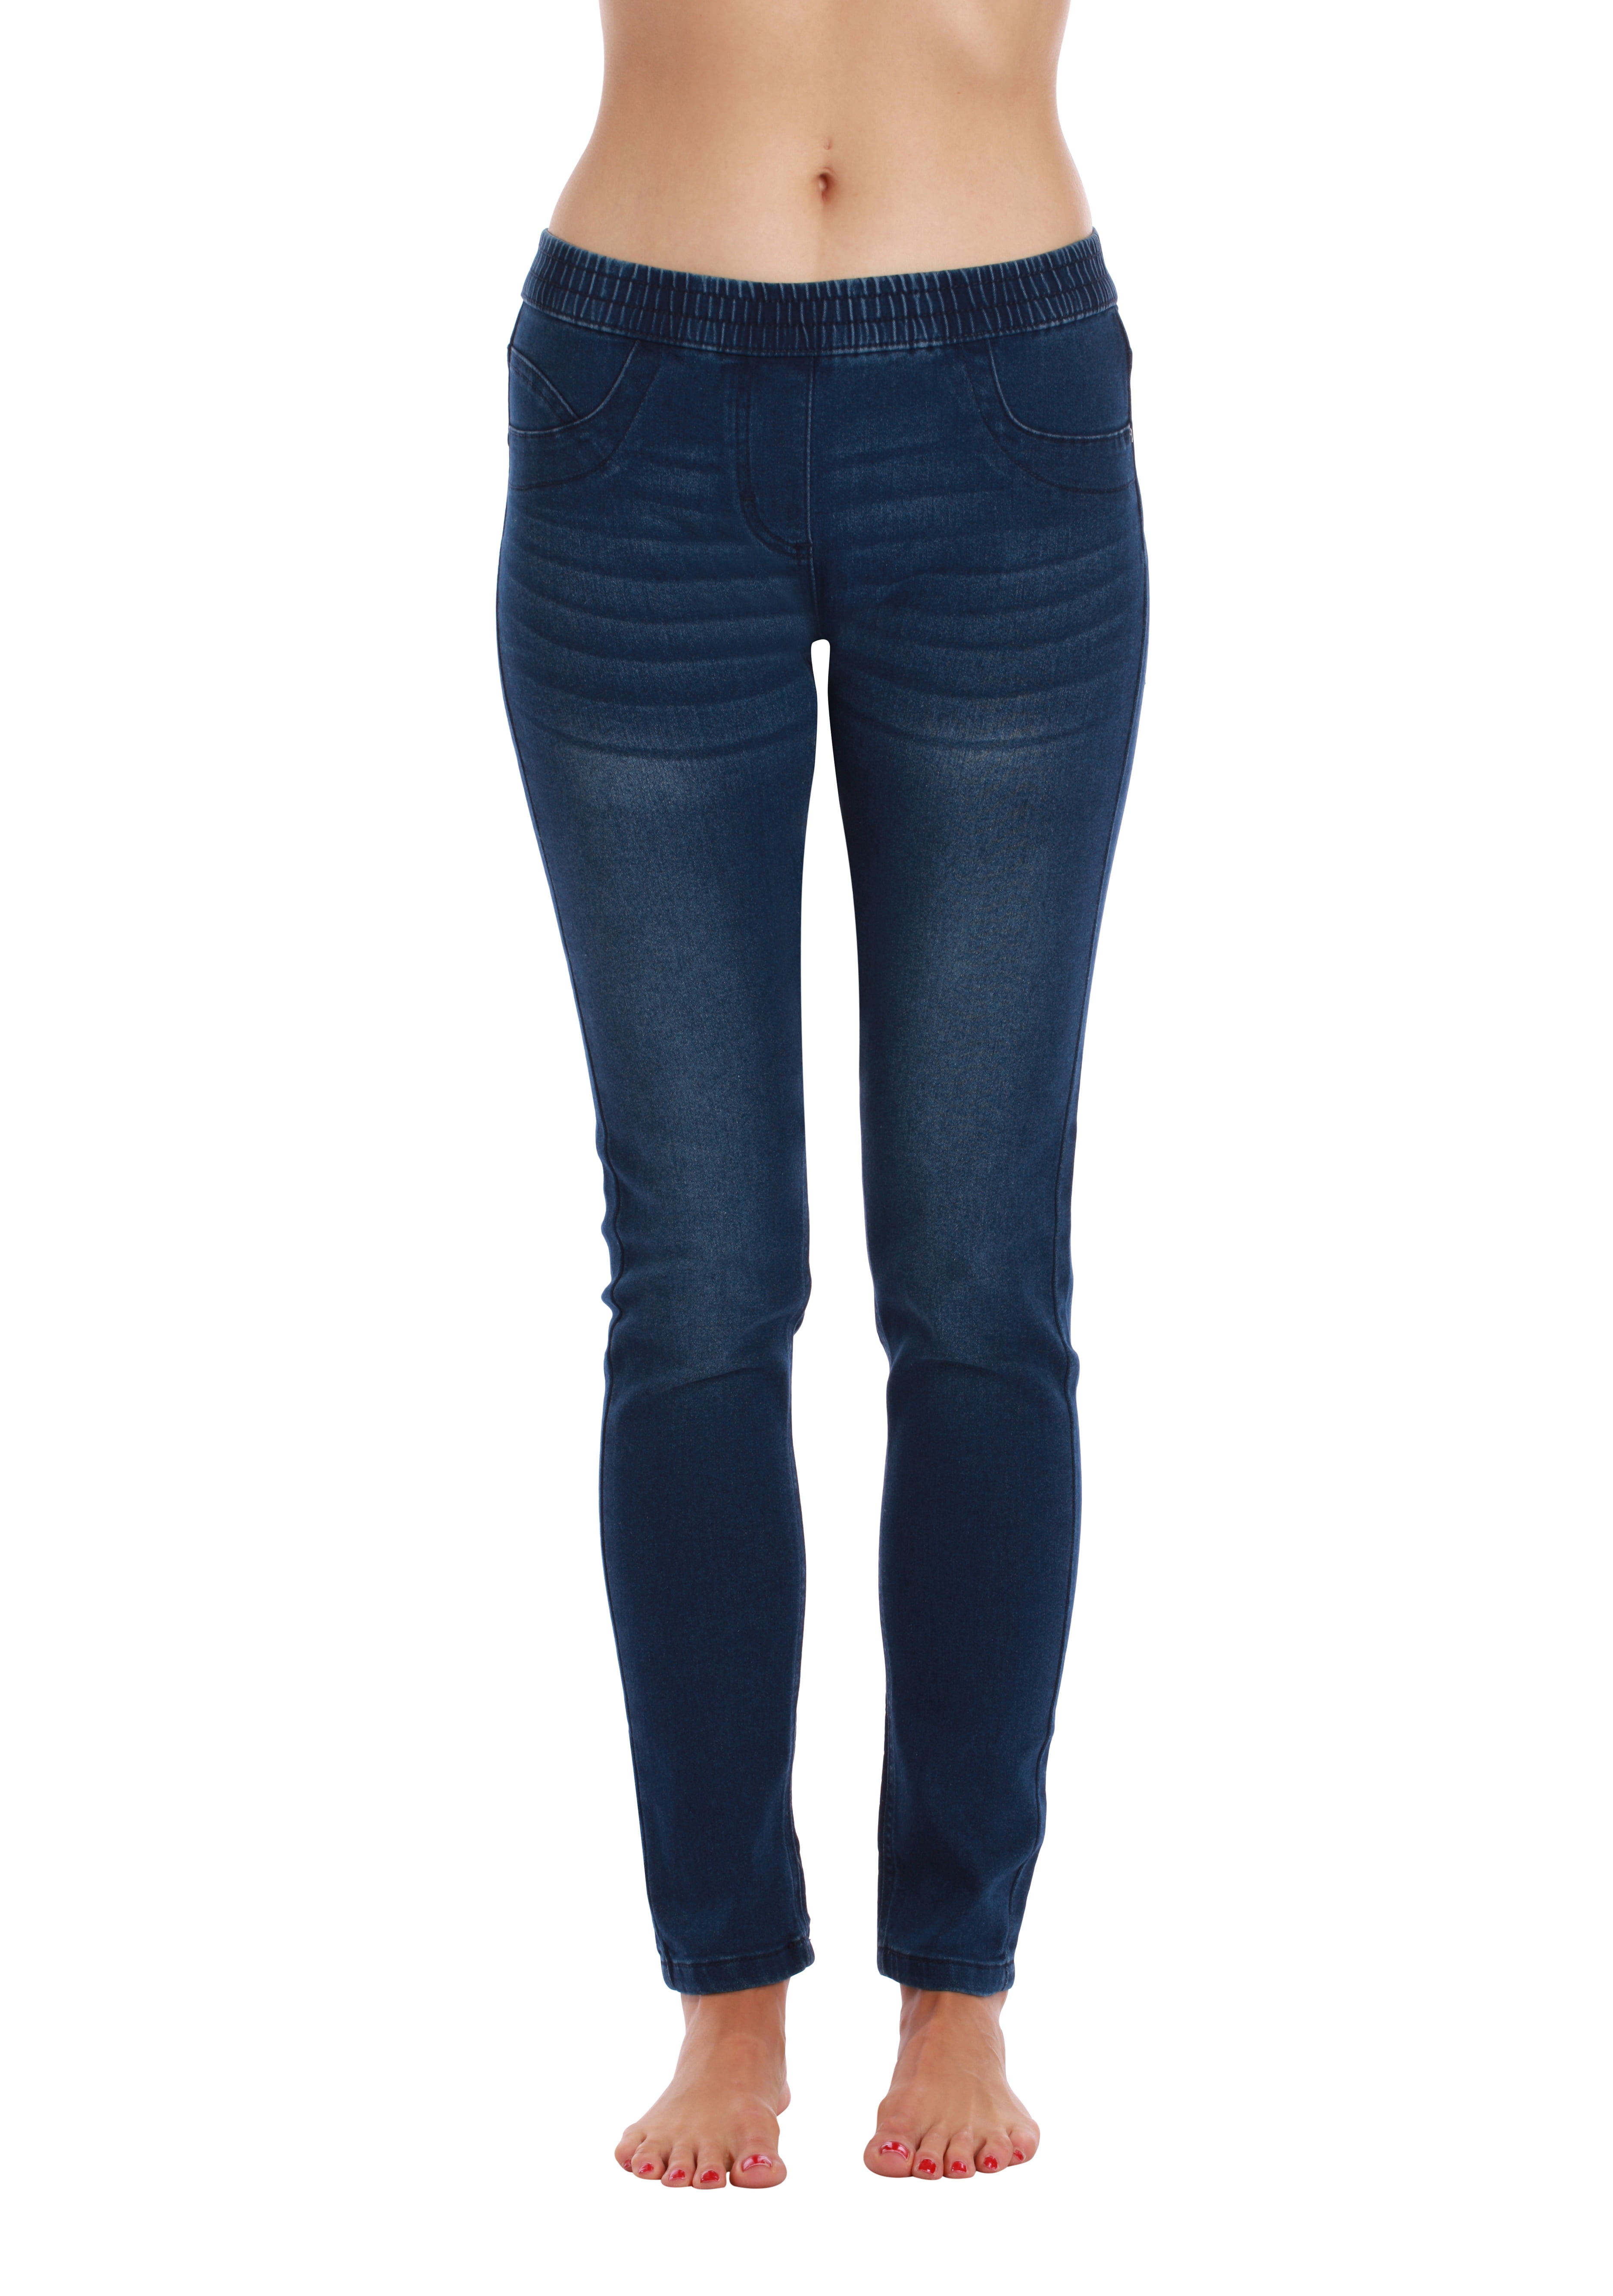 Just Love Women's Denim Jeggings with Pockets - Comfortable Stretch Jeans  Leggings (Denim, Medium) 